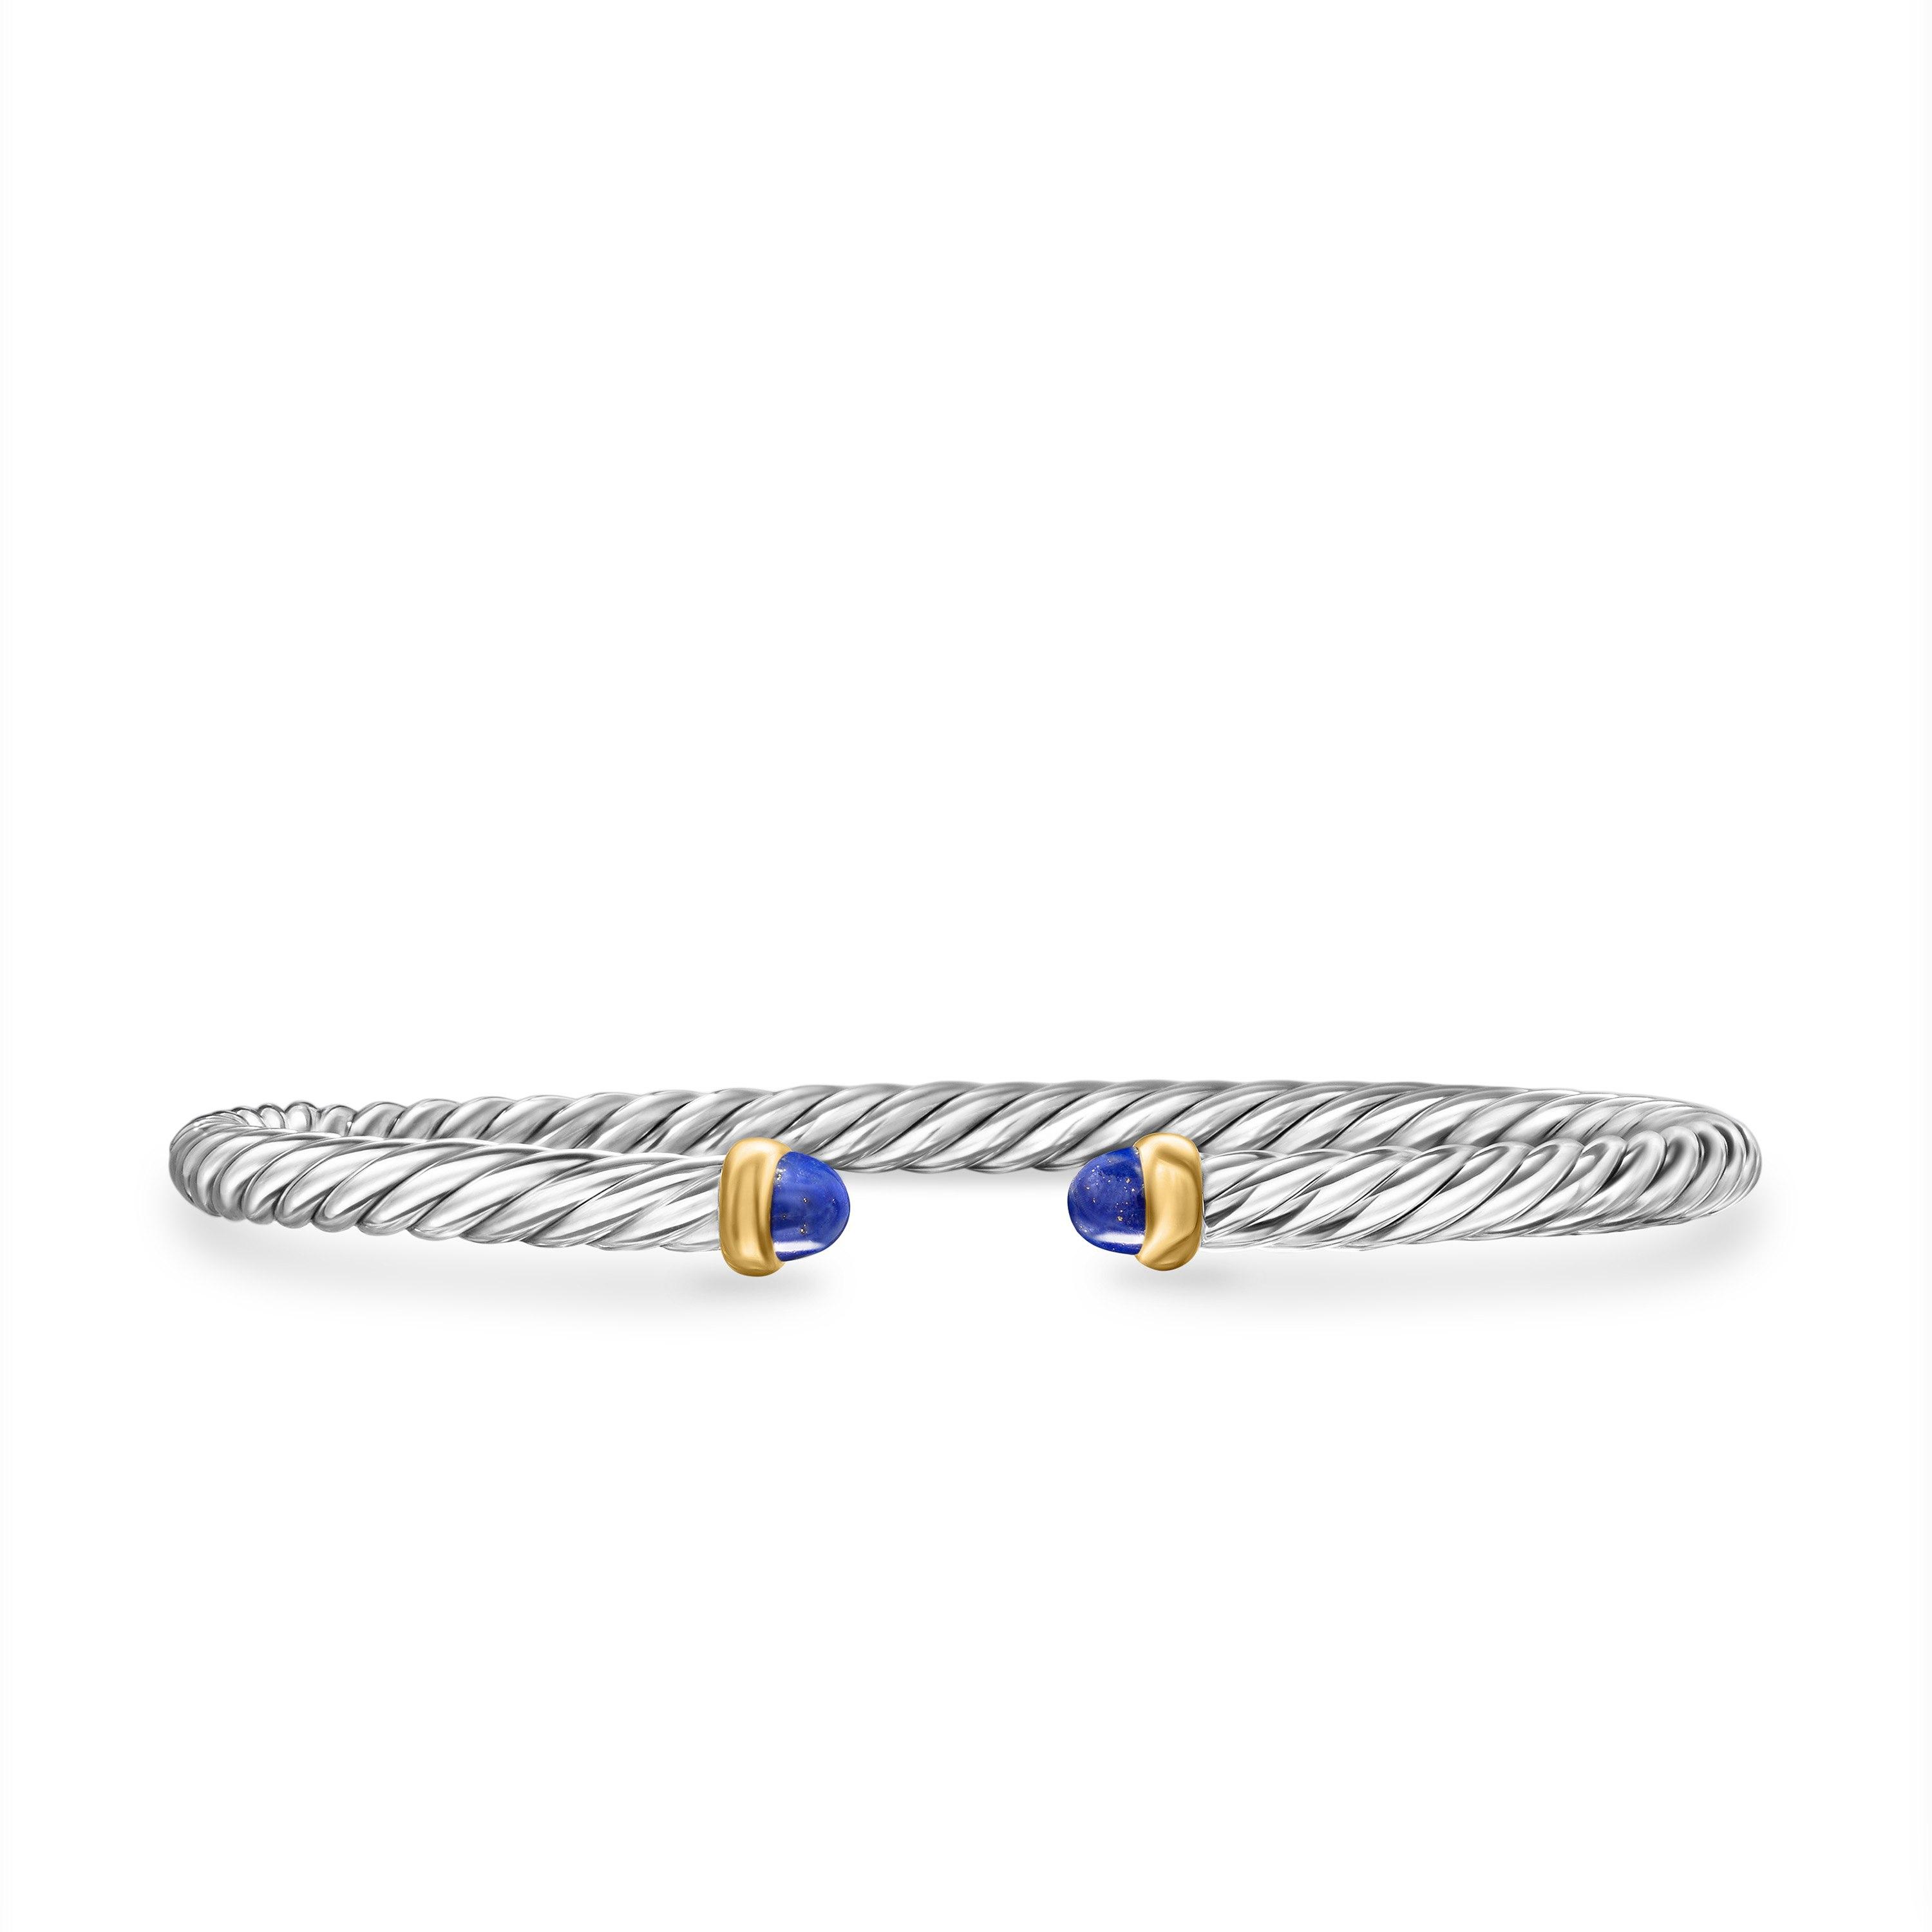 David Yurman Cable Flex Sterling Silver Bracelet with Lapis, Size Medium